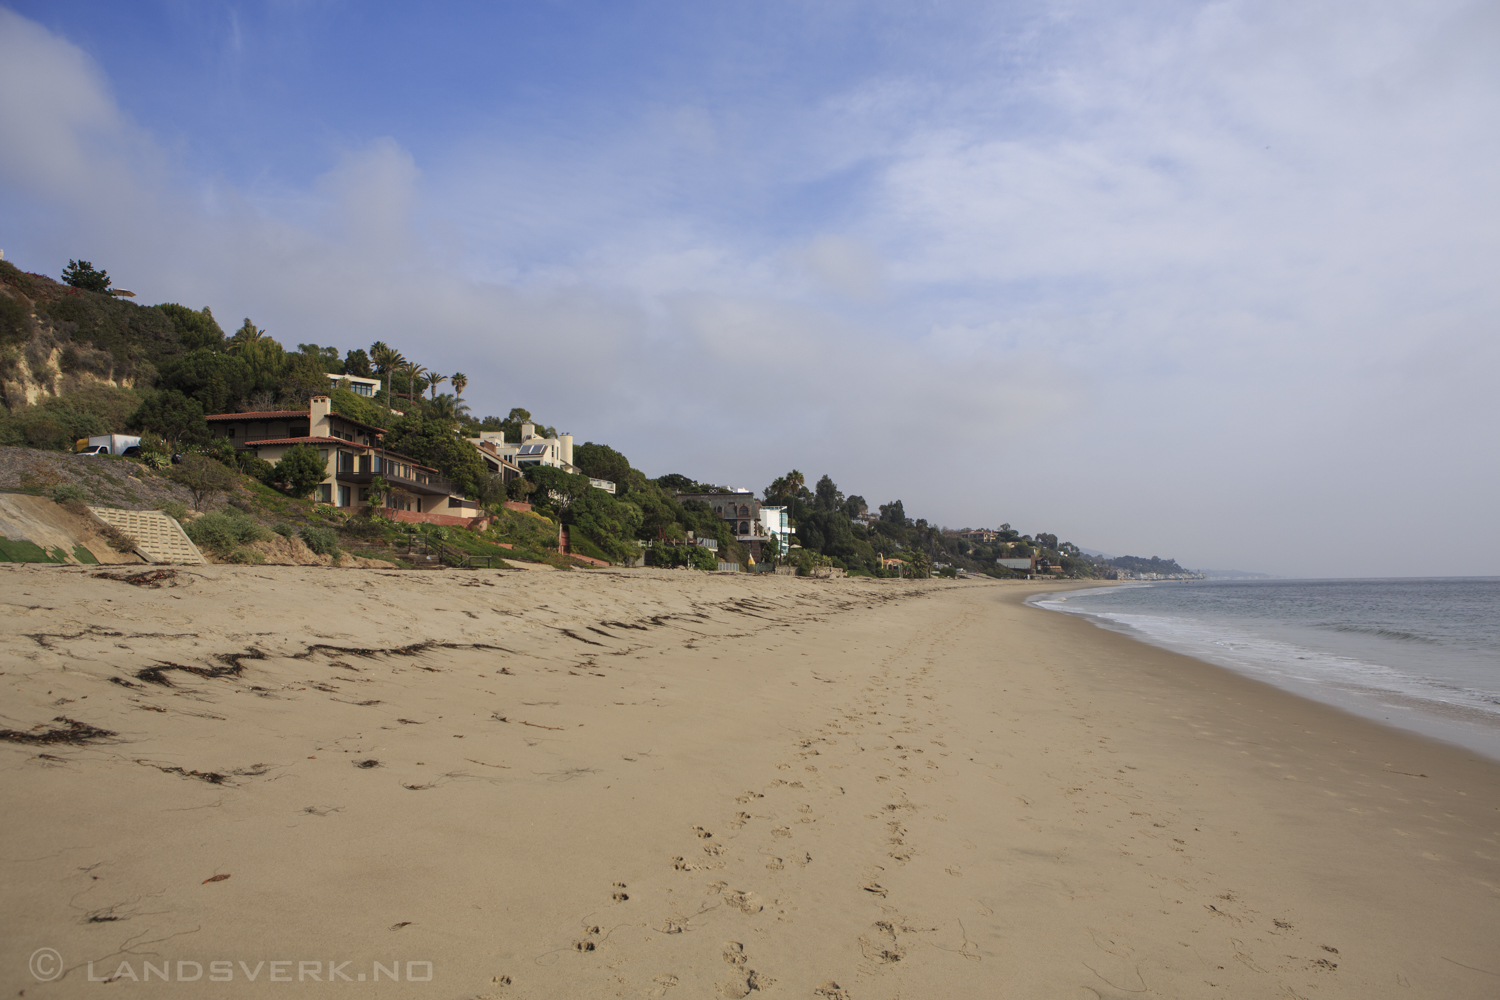 Malibu, California.

(Canon EOS 5D Mark III / Canon EF 24-70mm f/2.8 L USM)